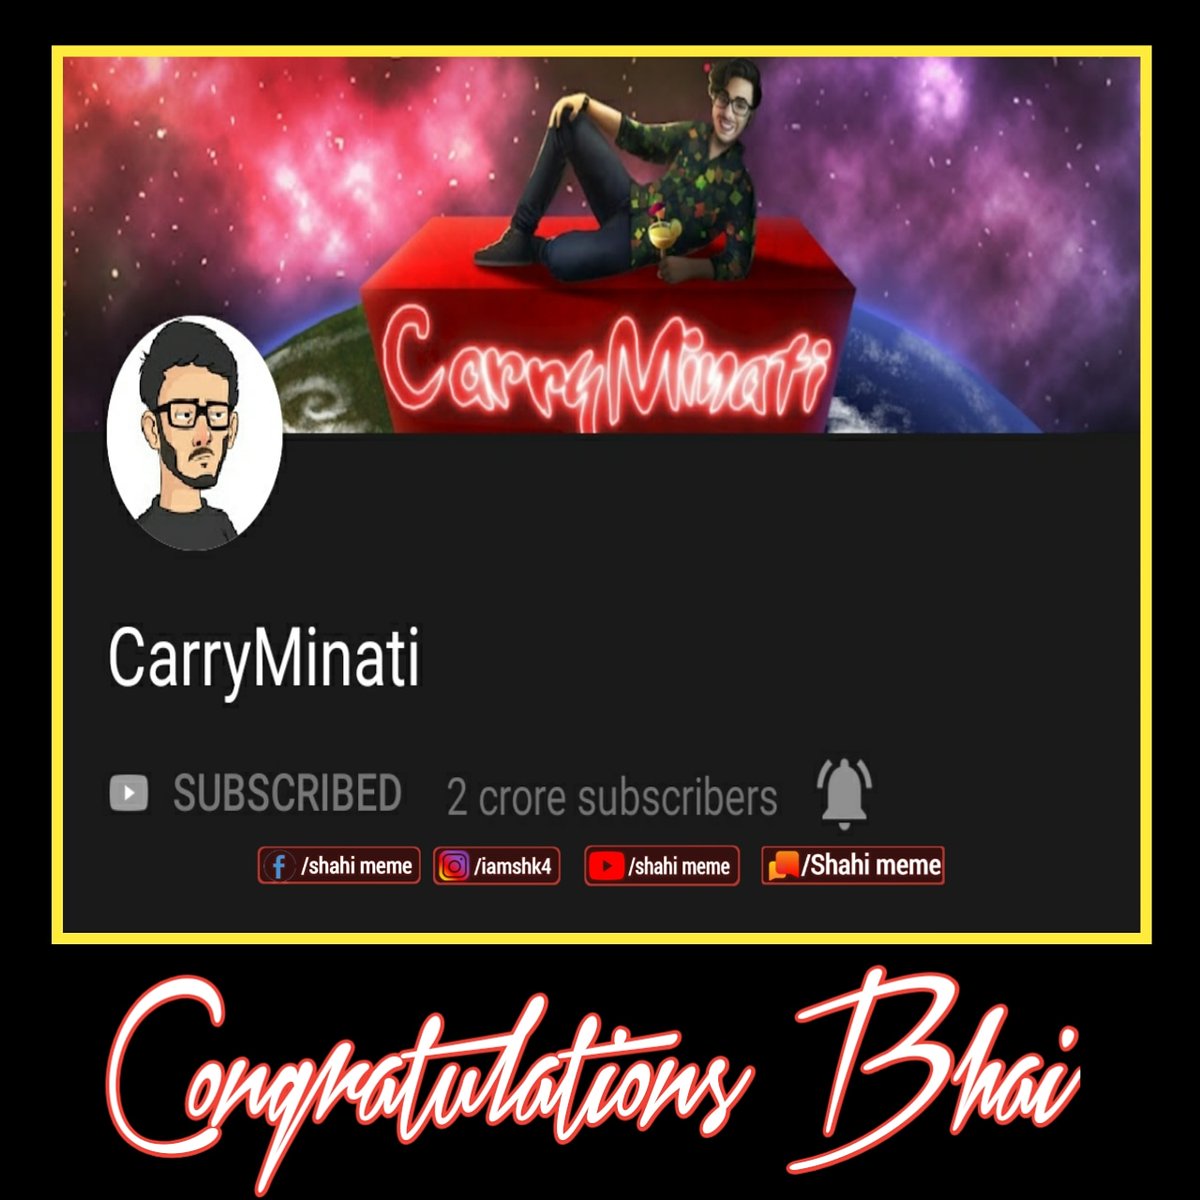 Congratulations@carryminati Bhai
#20MFORCARRY #20mforcarryminati